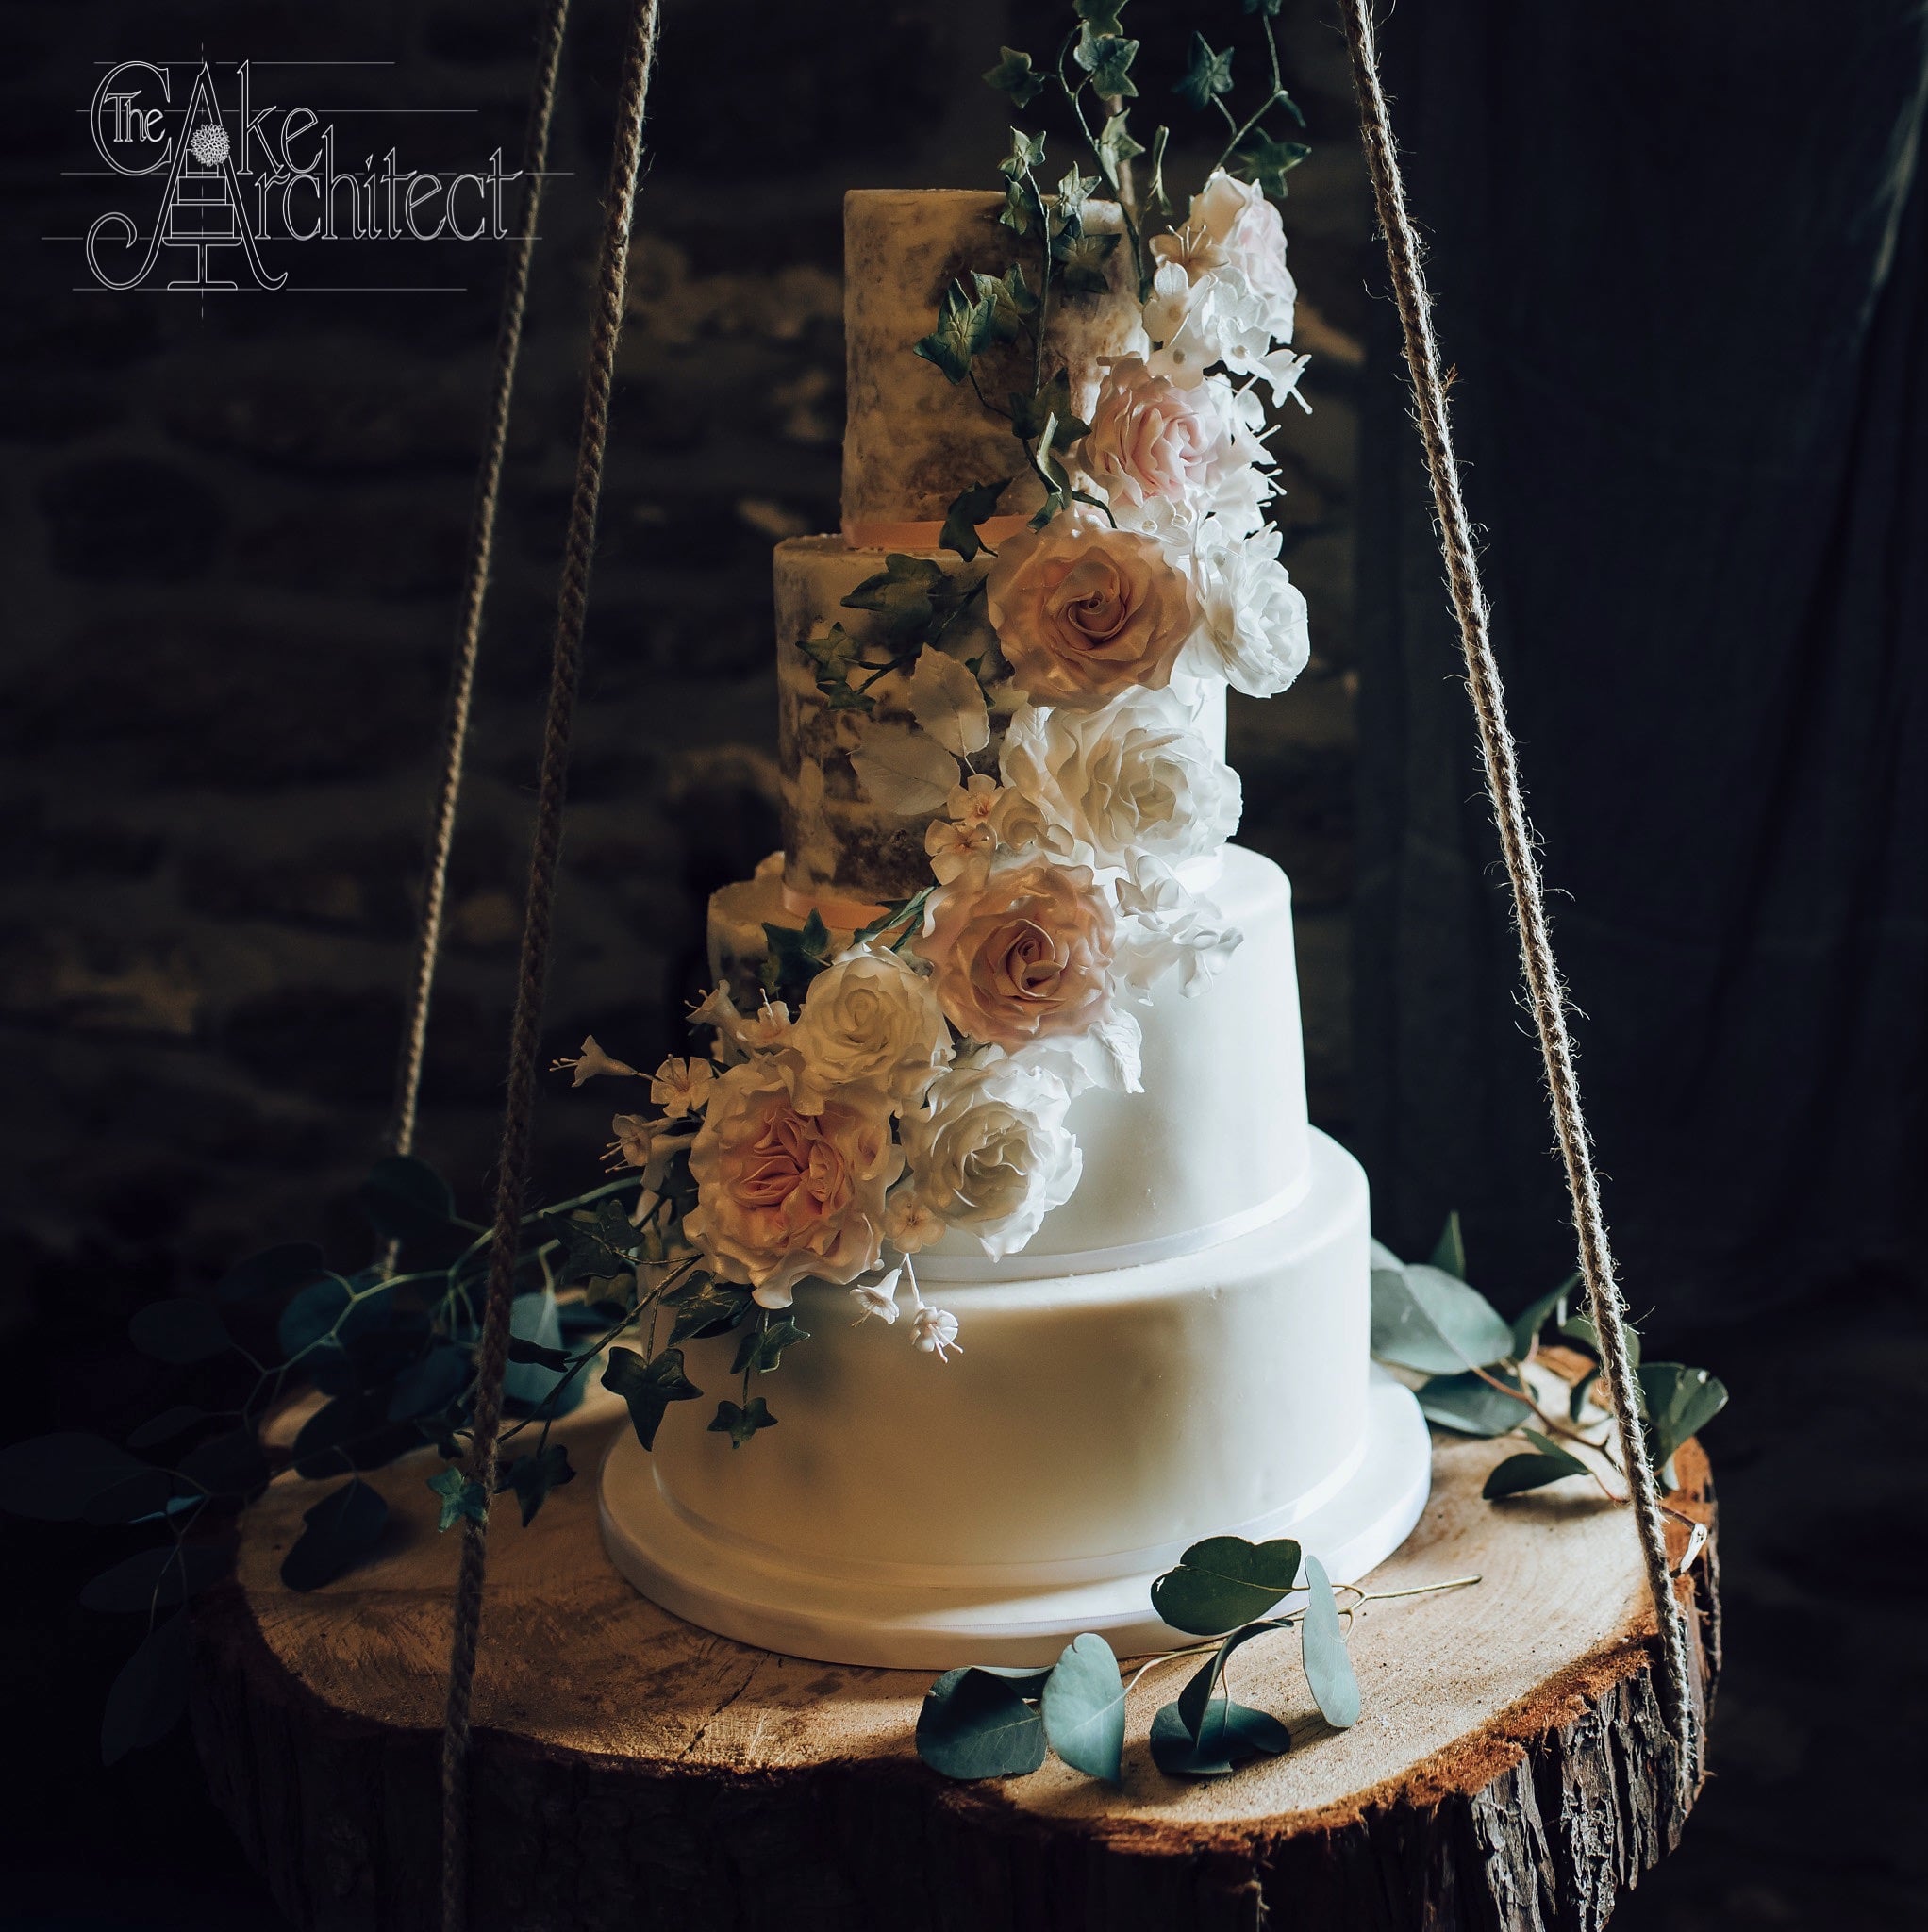 Luxury Floral Wedding Cakes, Naked Wedding Cakes, The Cake Architect, Bradford-on-Avon